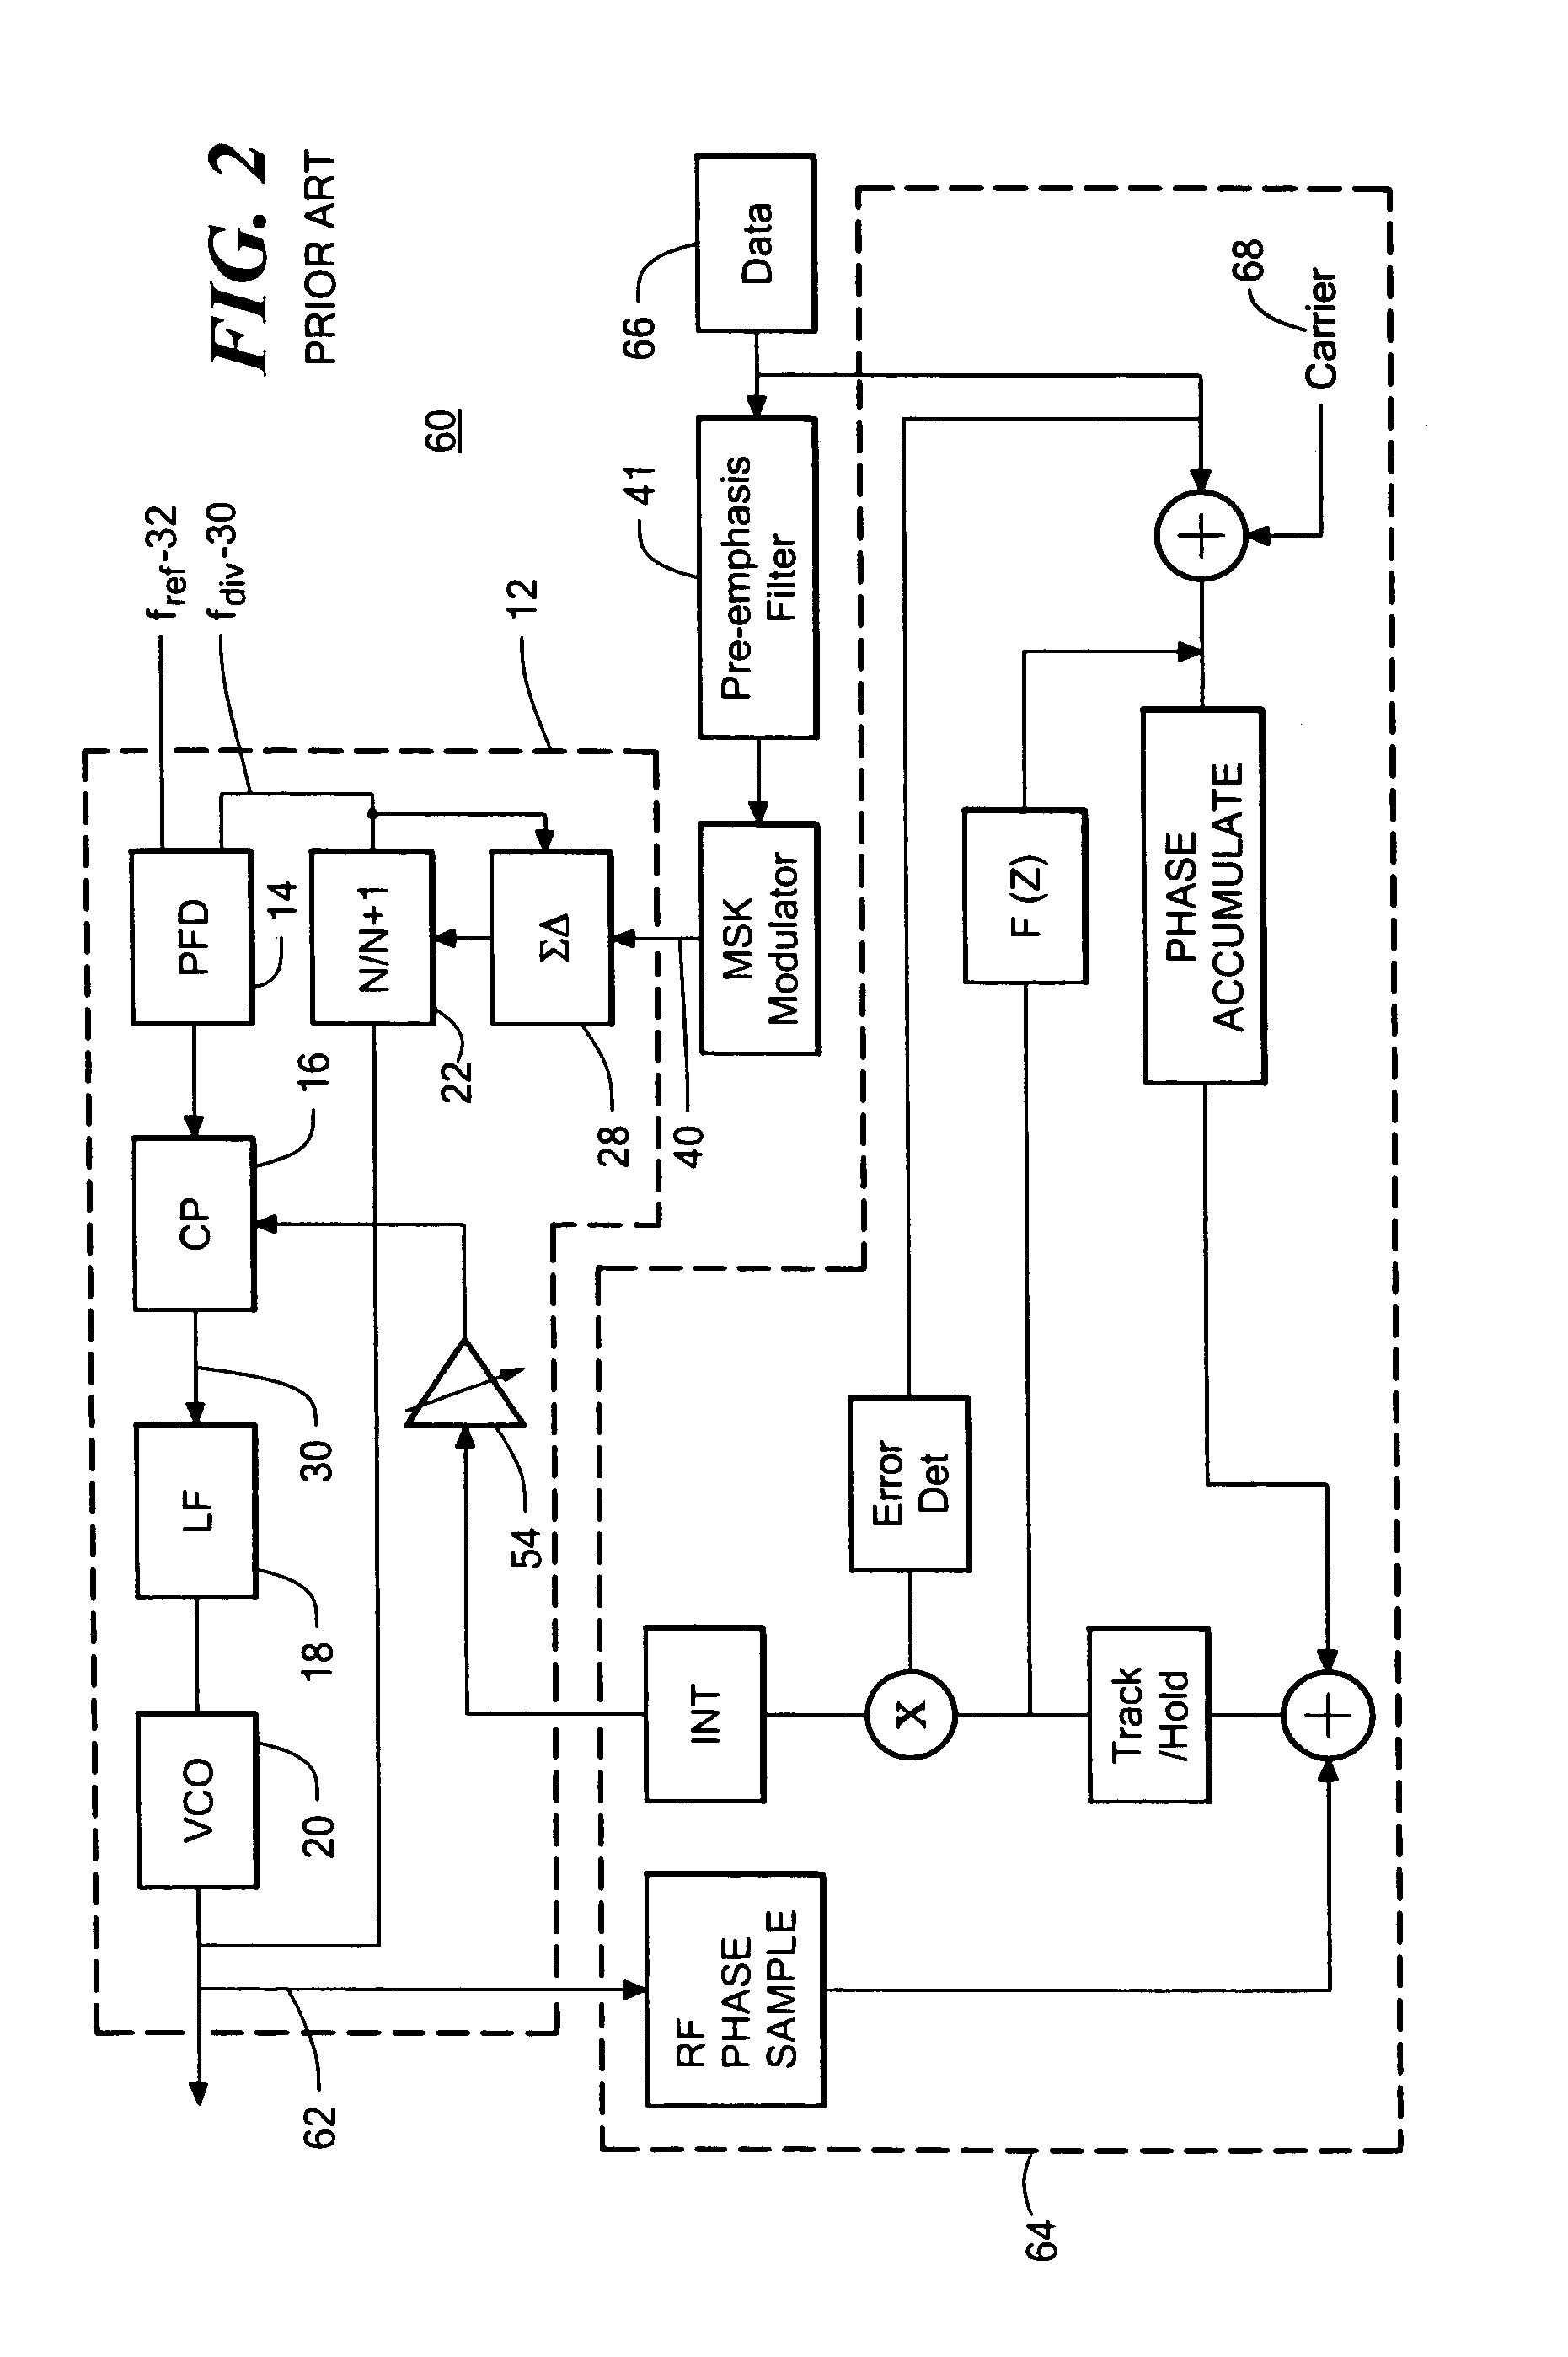 Phase lock loop RF modulator system